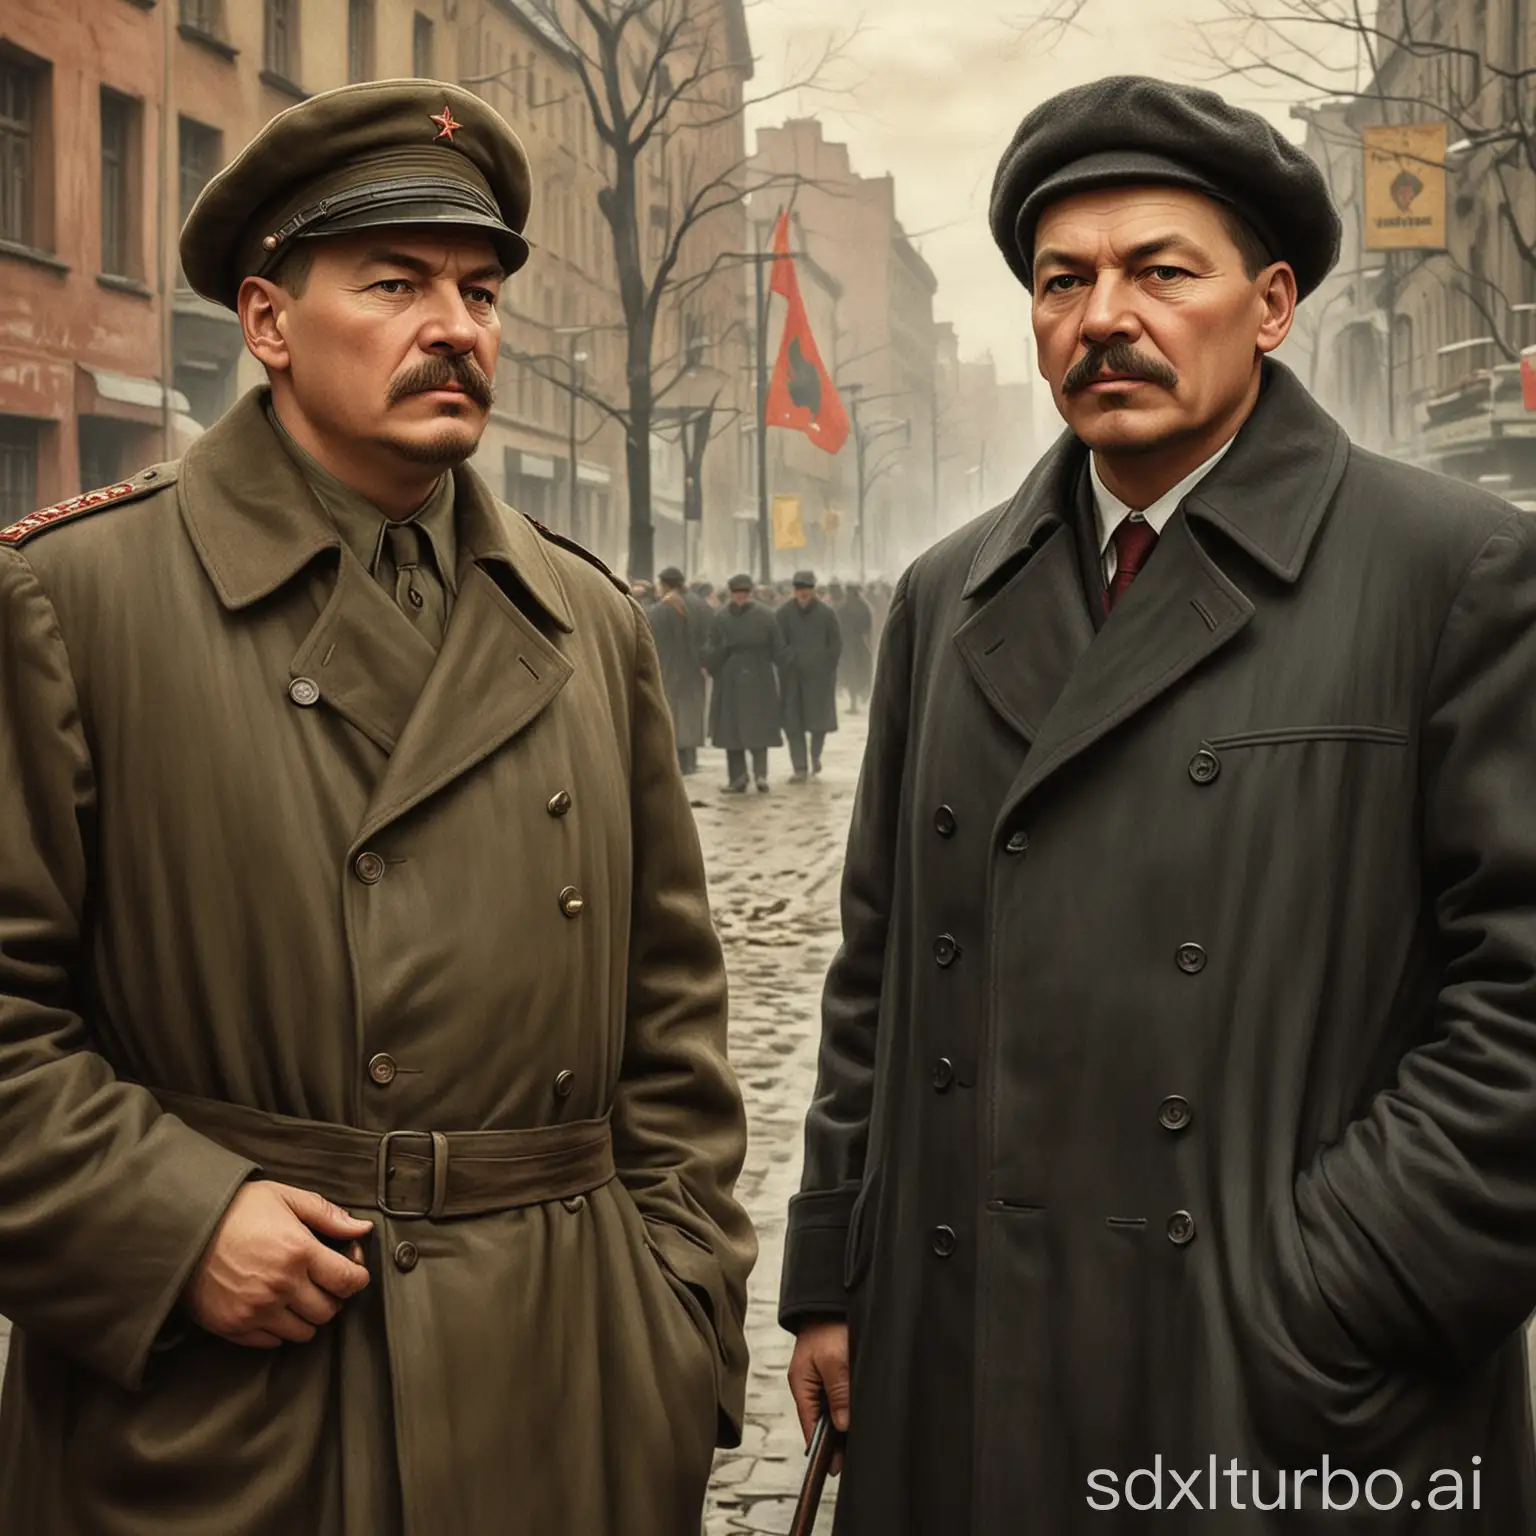 Leaders-Lenin-and-Stalin-Inspiring-Resistance-Against-Bourgeois-Oppression